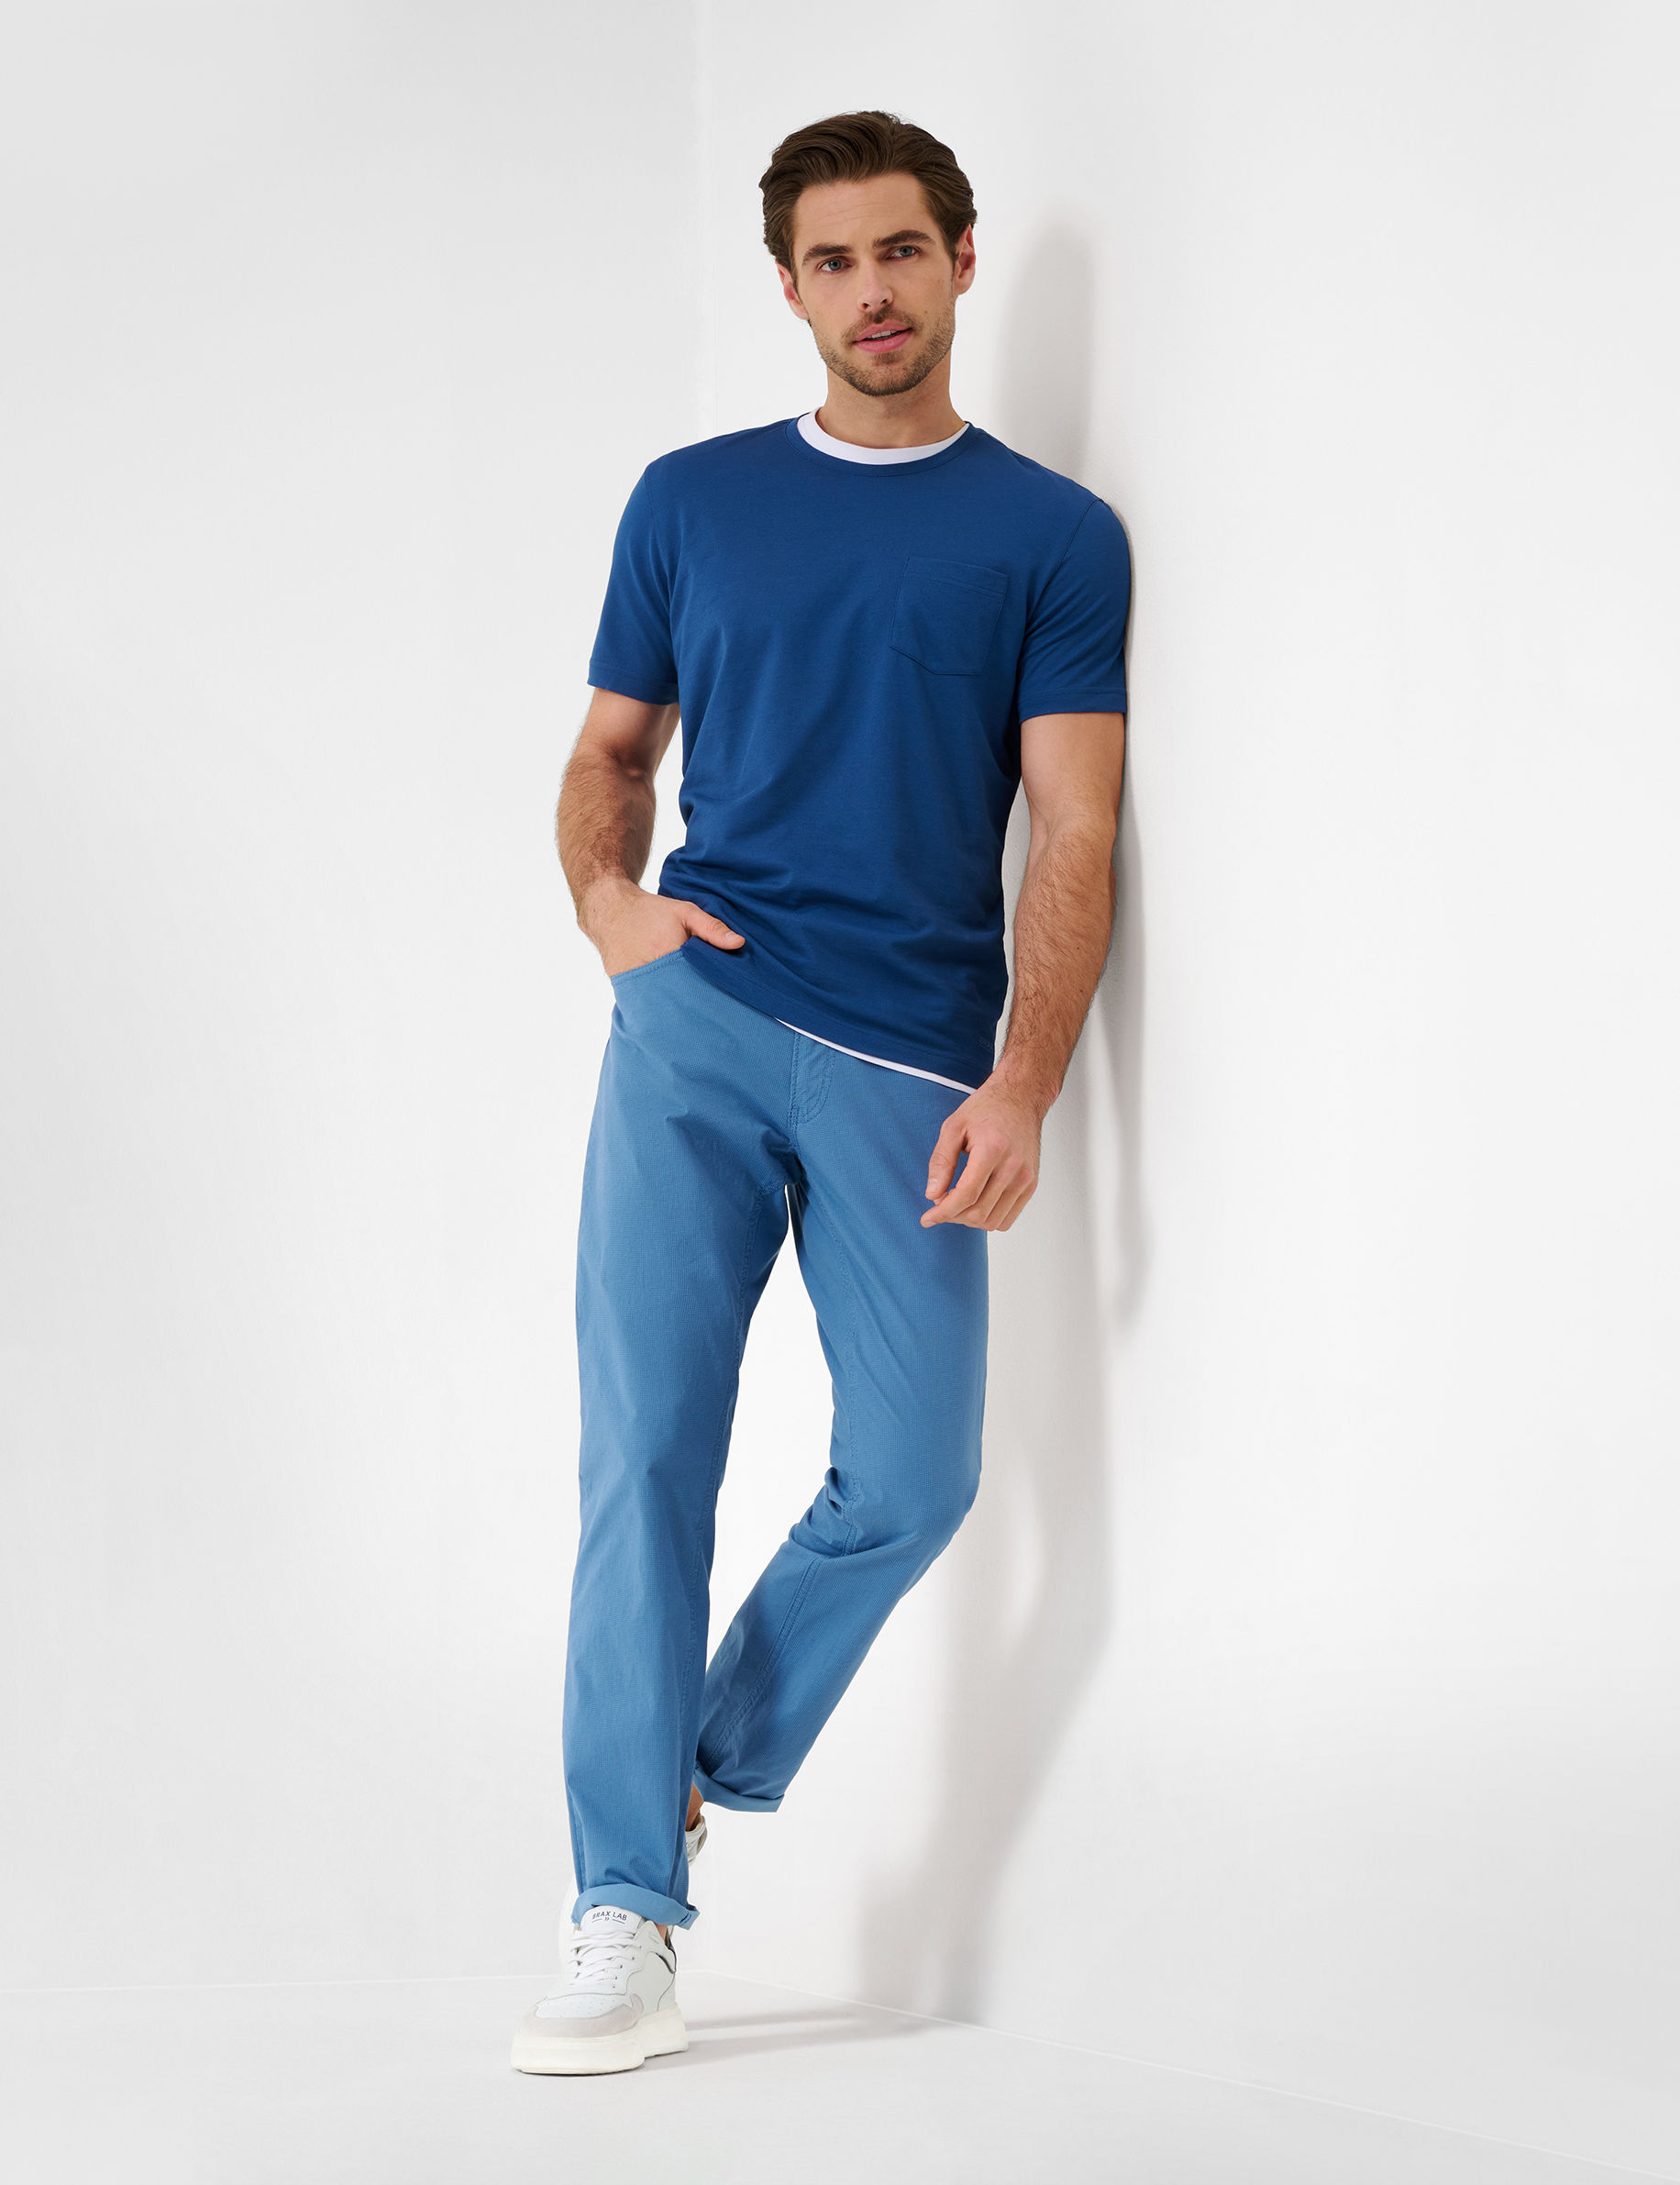 Men Style CHUCK DUSTY BLUE Modern Fit Model Outfit